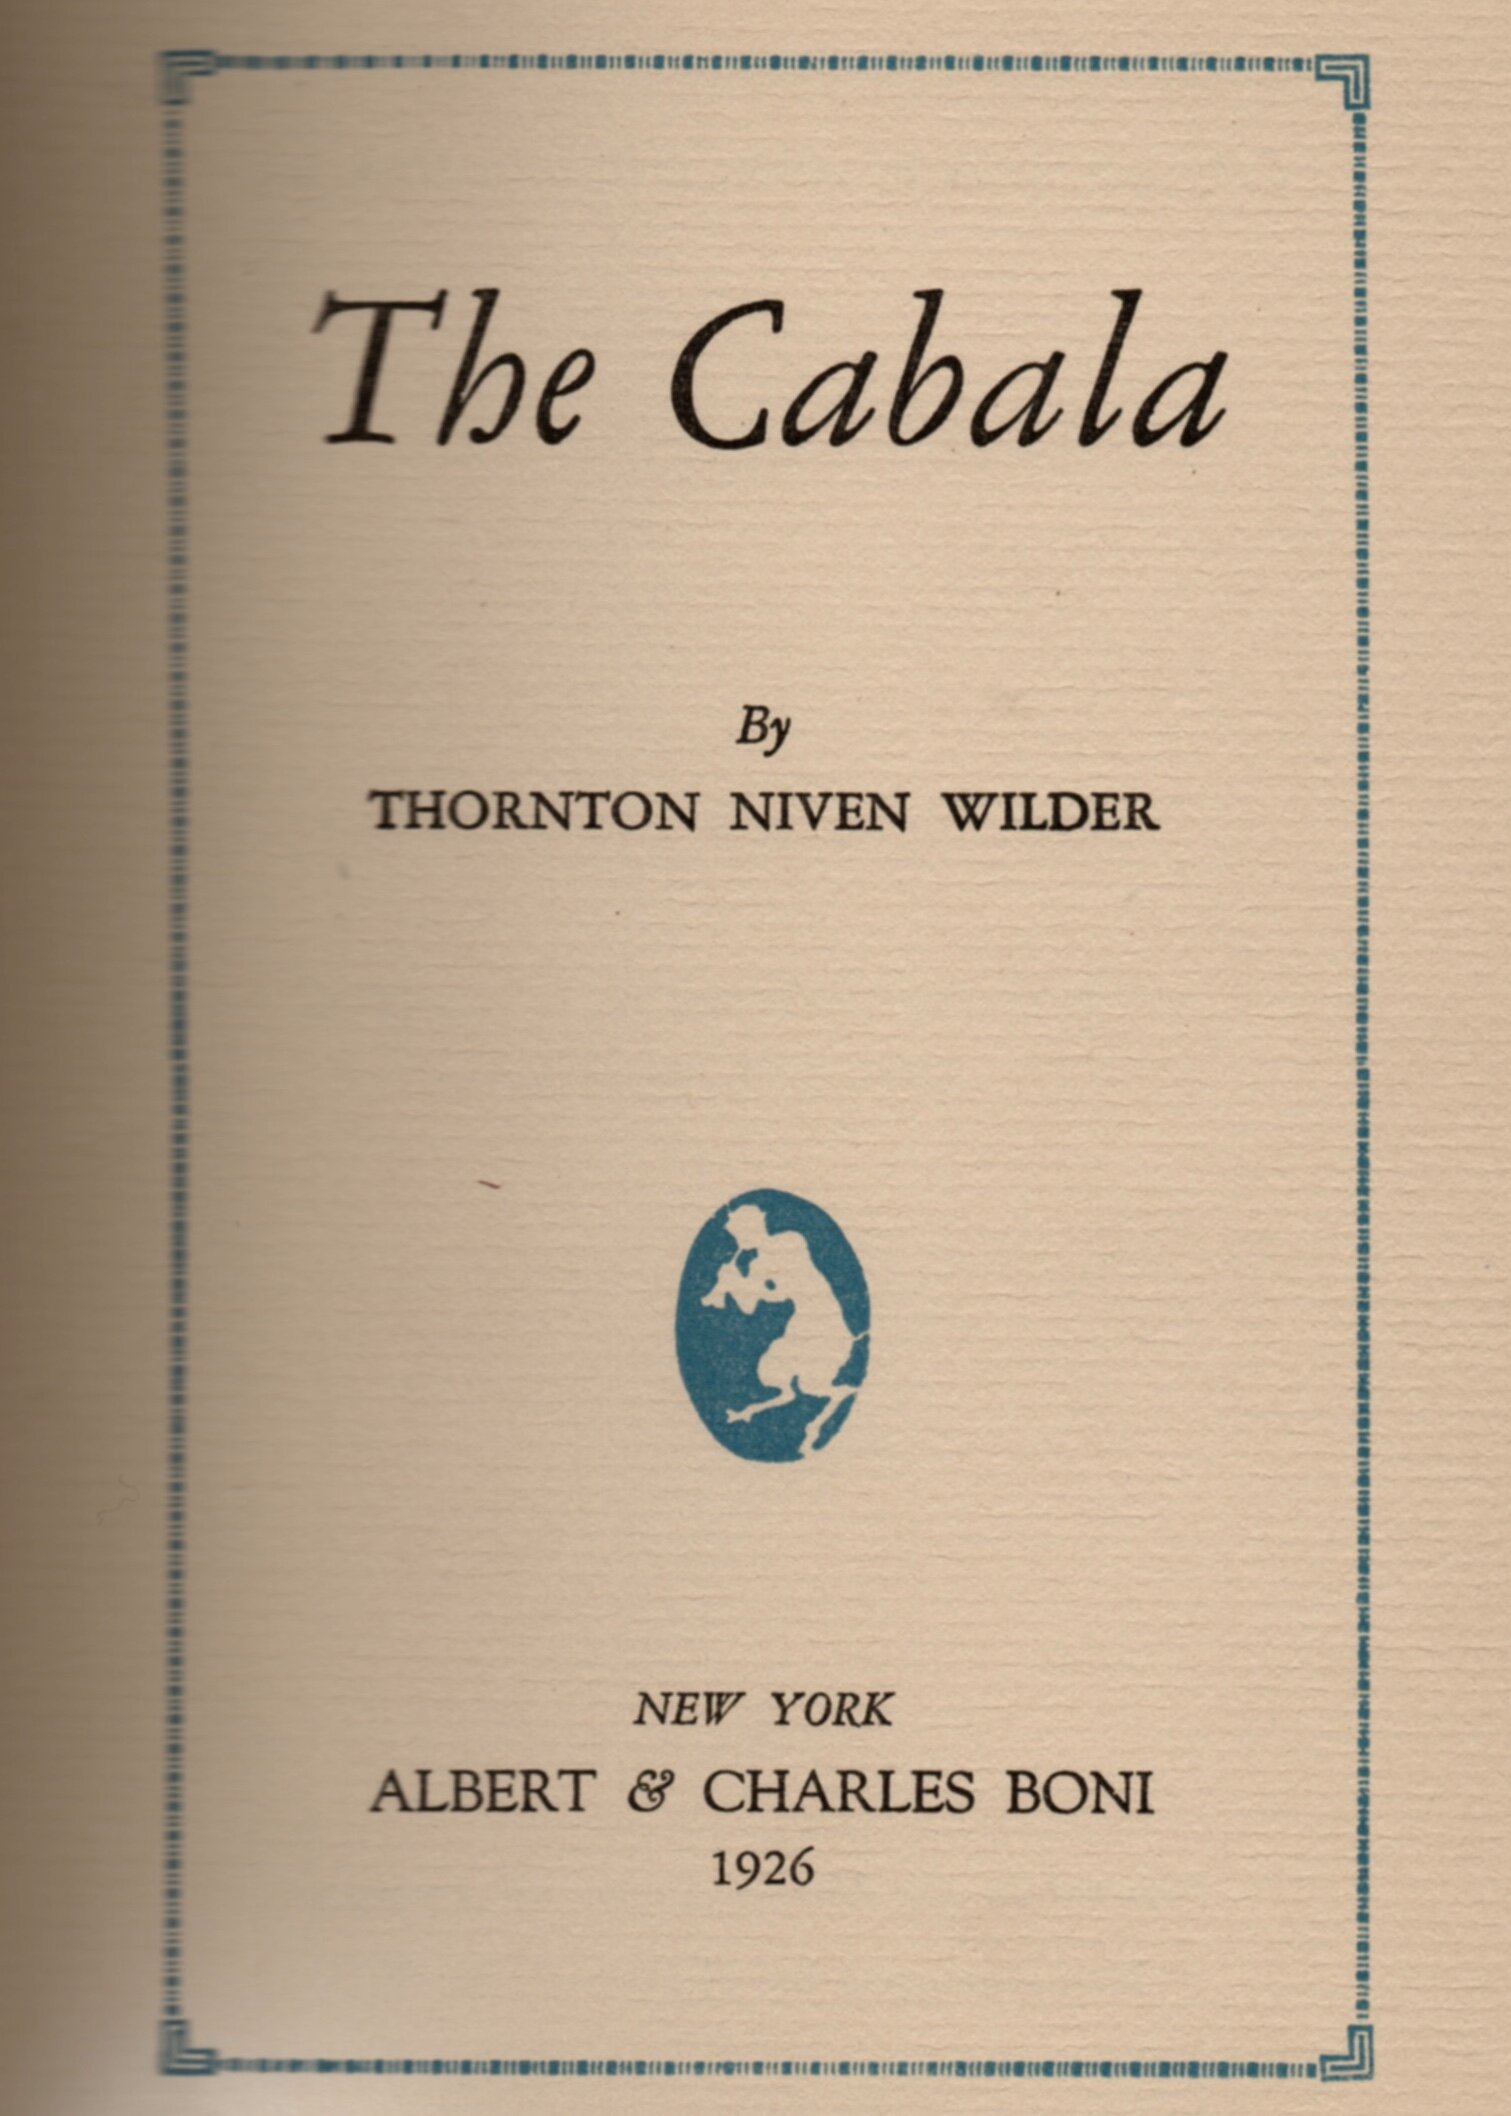 Thornton Wilder Title Page Cabala.jpeg